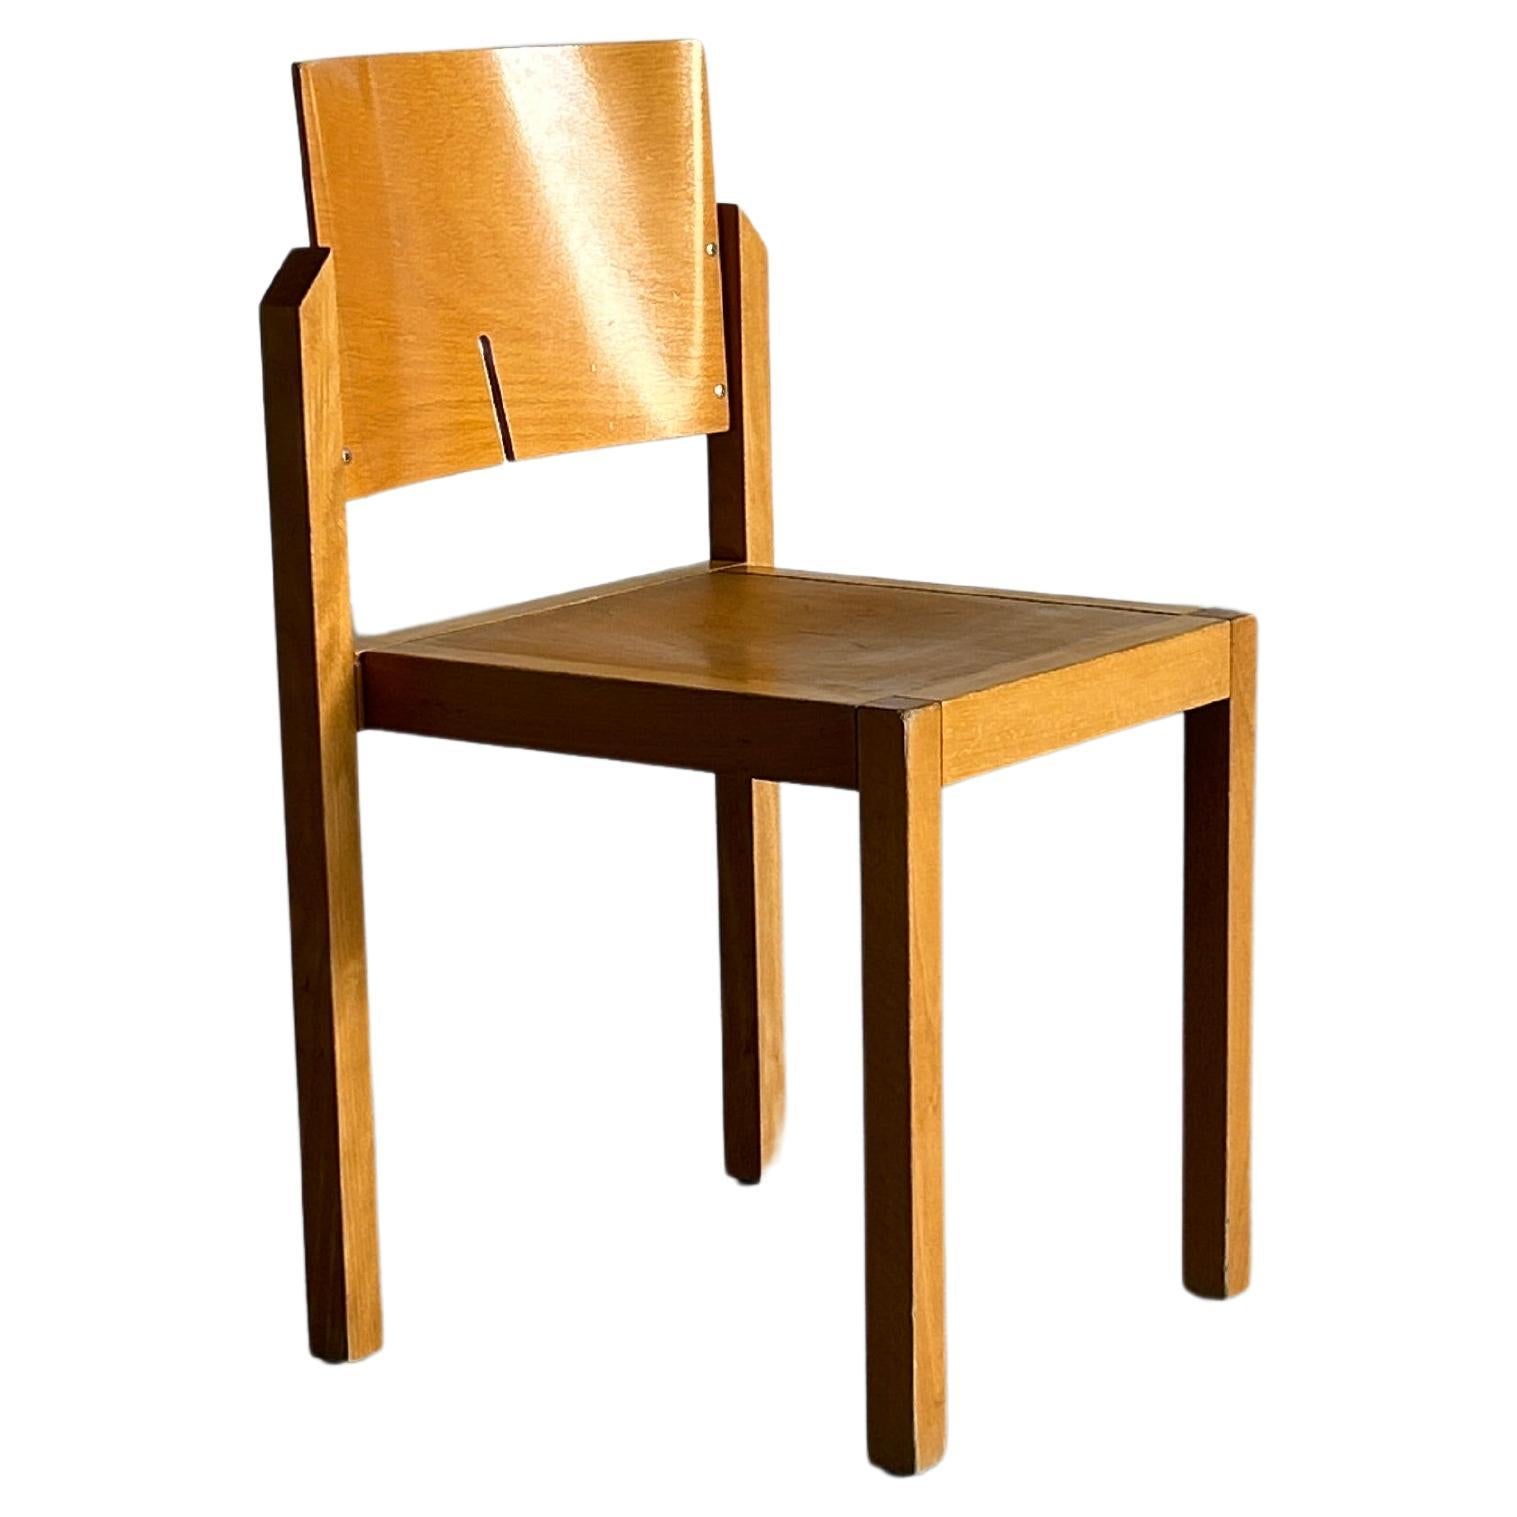 Thonet Postmodern Sculptural Wooden Chair, 1990s Austria For Sale